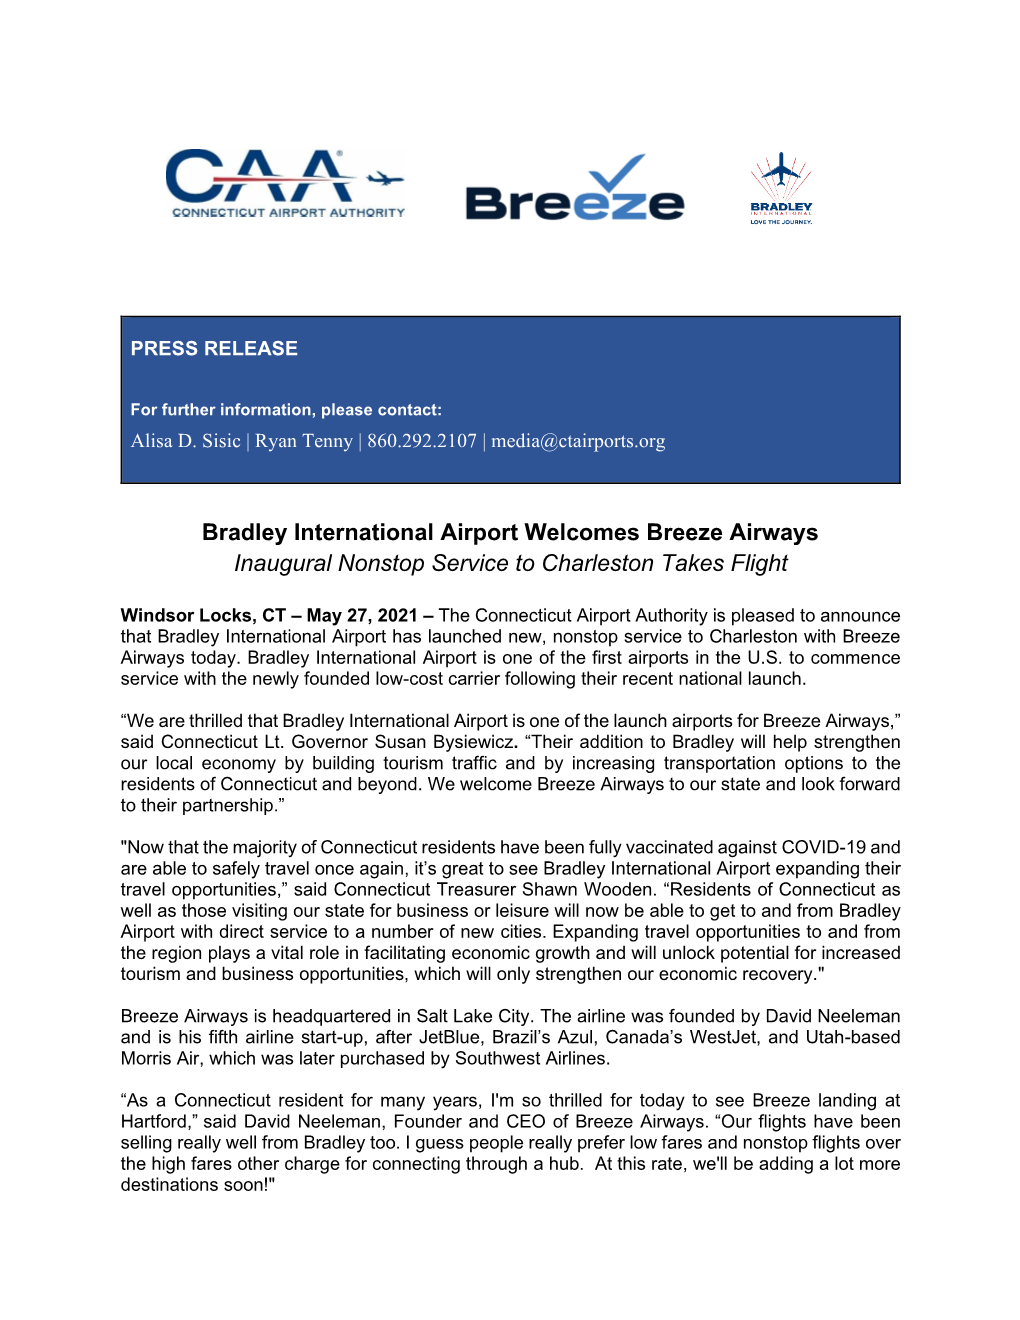 Bradley International Airport Welcomes Breeze Airways Inaugural Nonstop Service to Charleston Takes Flight